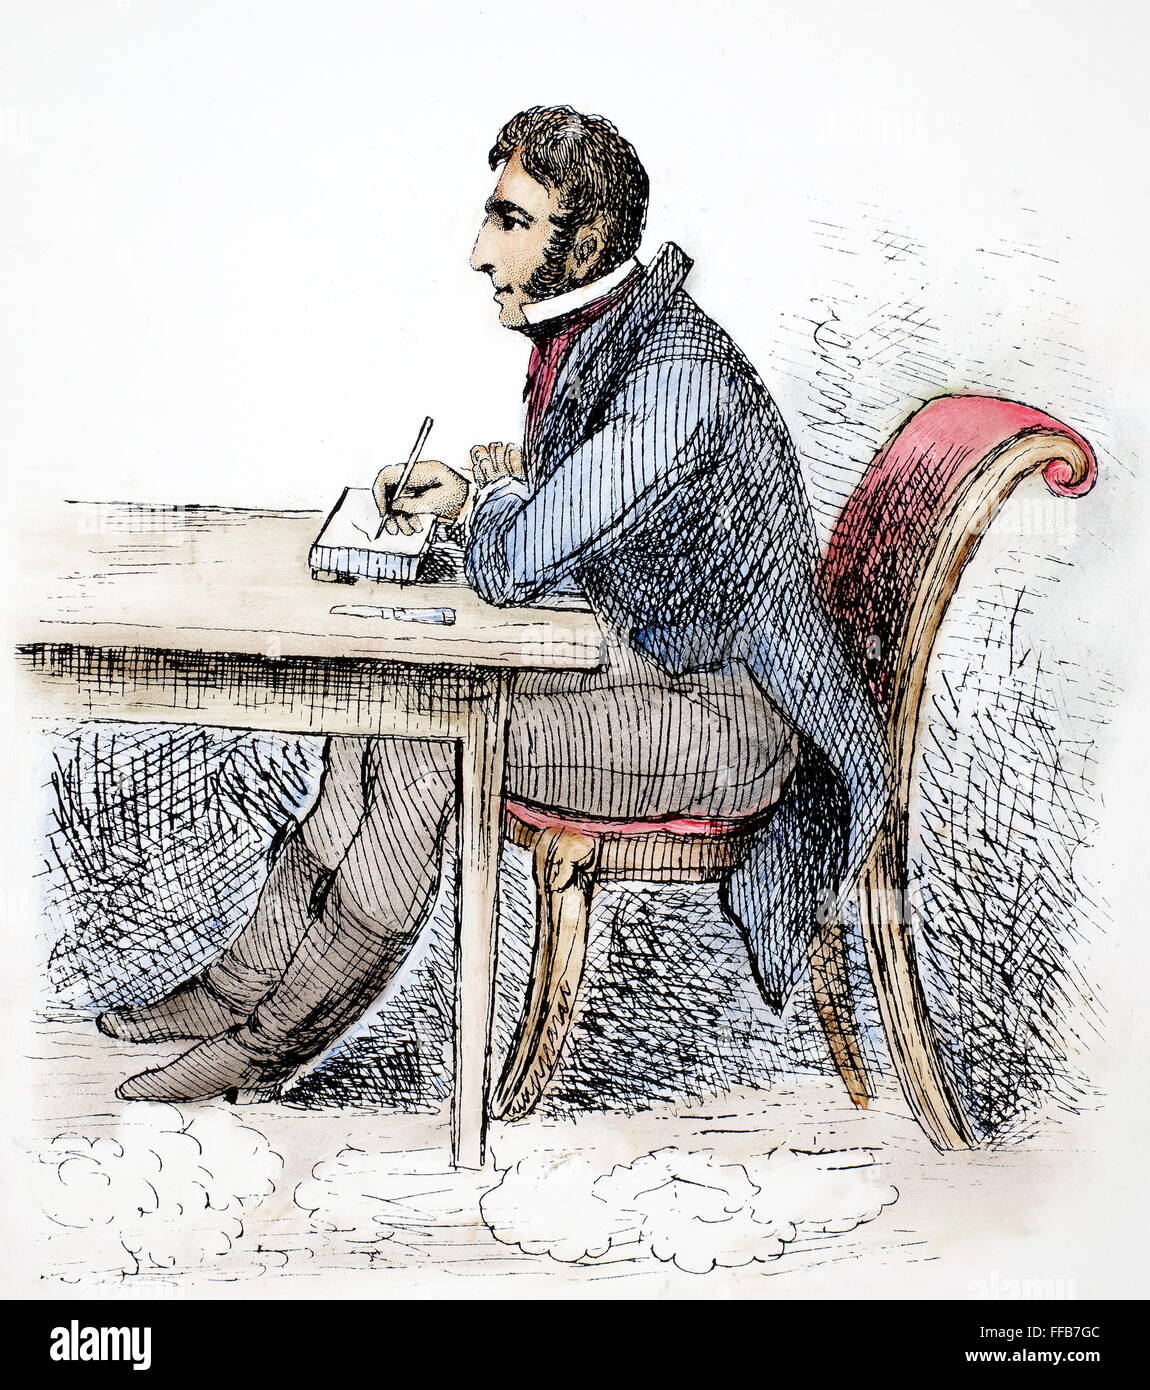 GEORGE CRUIKSHANK /n(1792-1878). English caricaturist and illustrator. Self-portrait caricature etching, 1820. Stock Photo